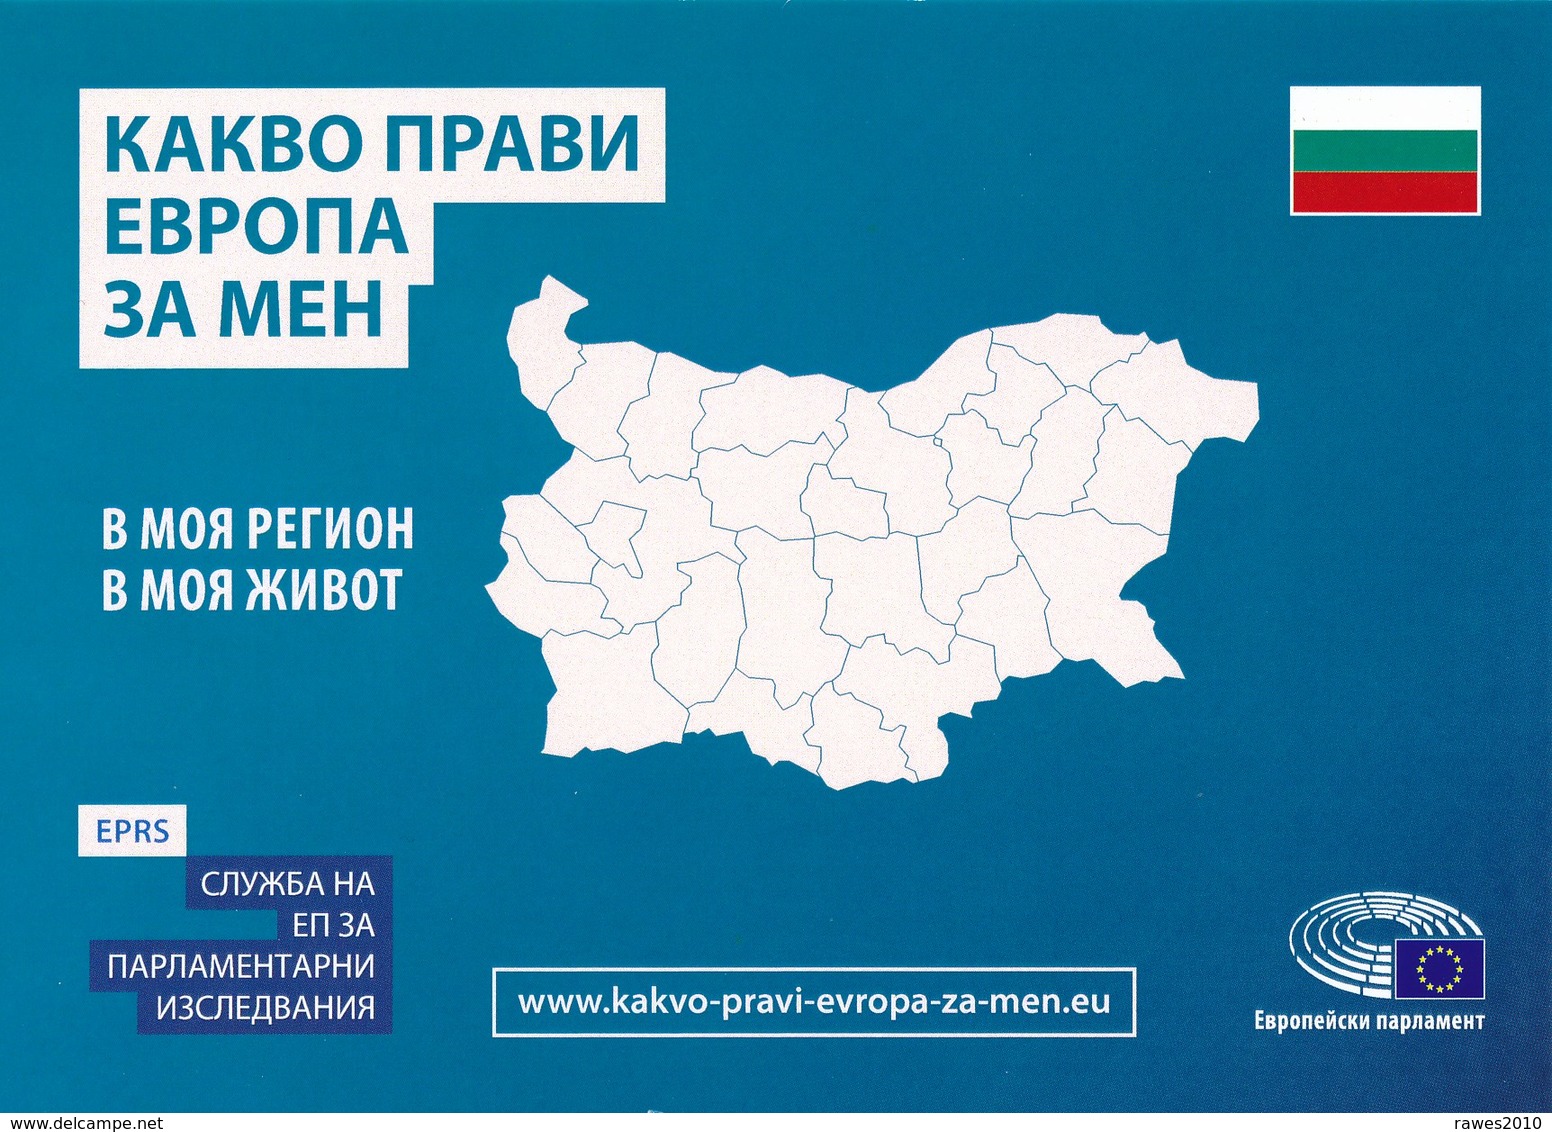 AK Bulgarien 2019 EU - Mitgliedschaft + Landkarte + Fahne - Ausgabe Des EU-Parlamentes Brüssel Zur Europawahl - Istituzioni Europee